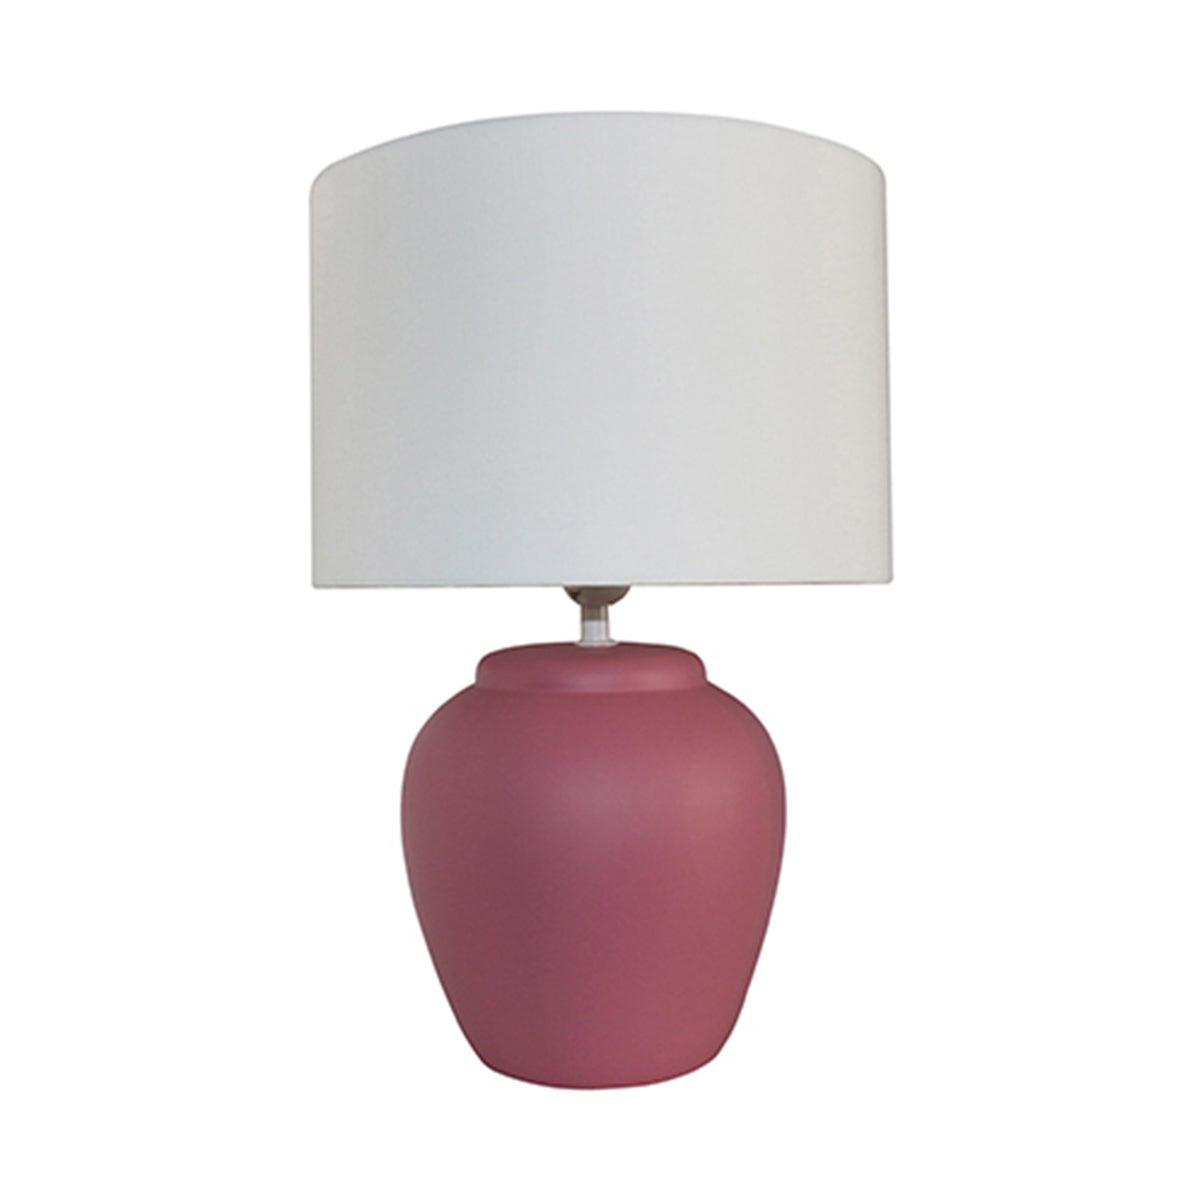 Monryk Ceramic Table Lamp